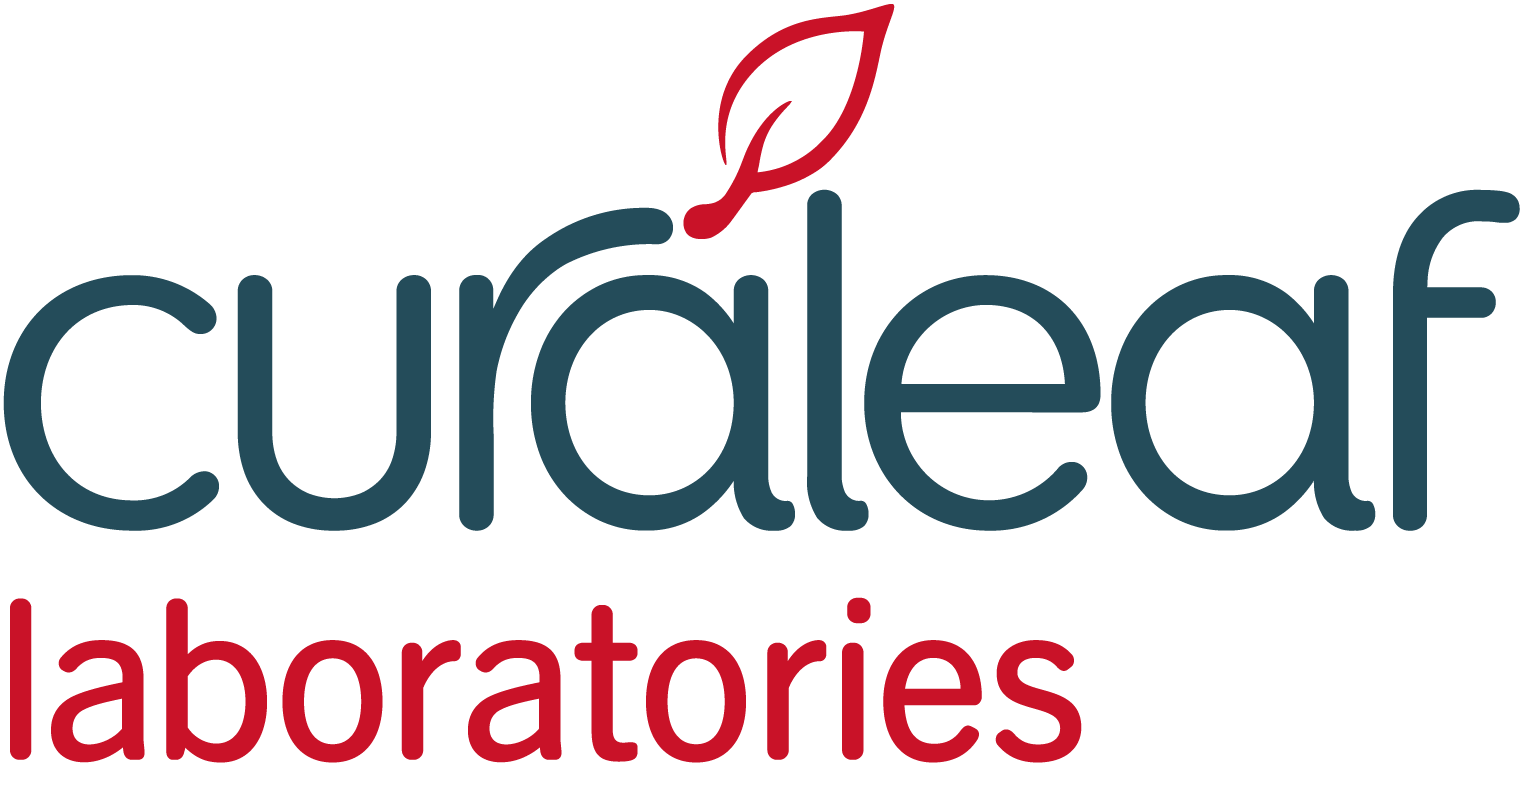 Curaleaf Laboratories